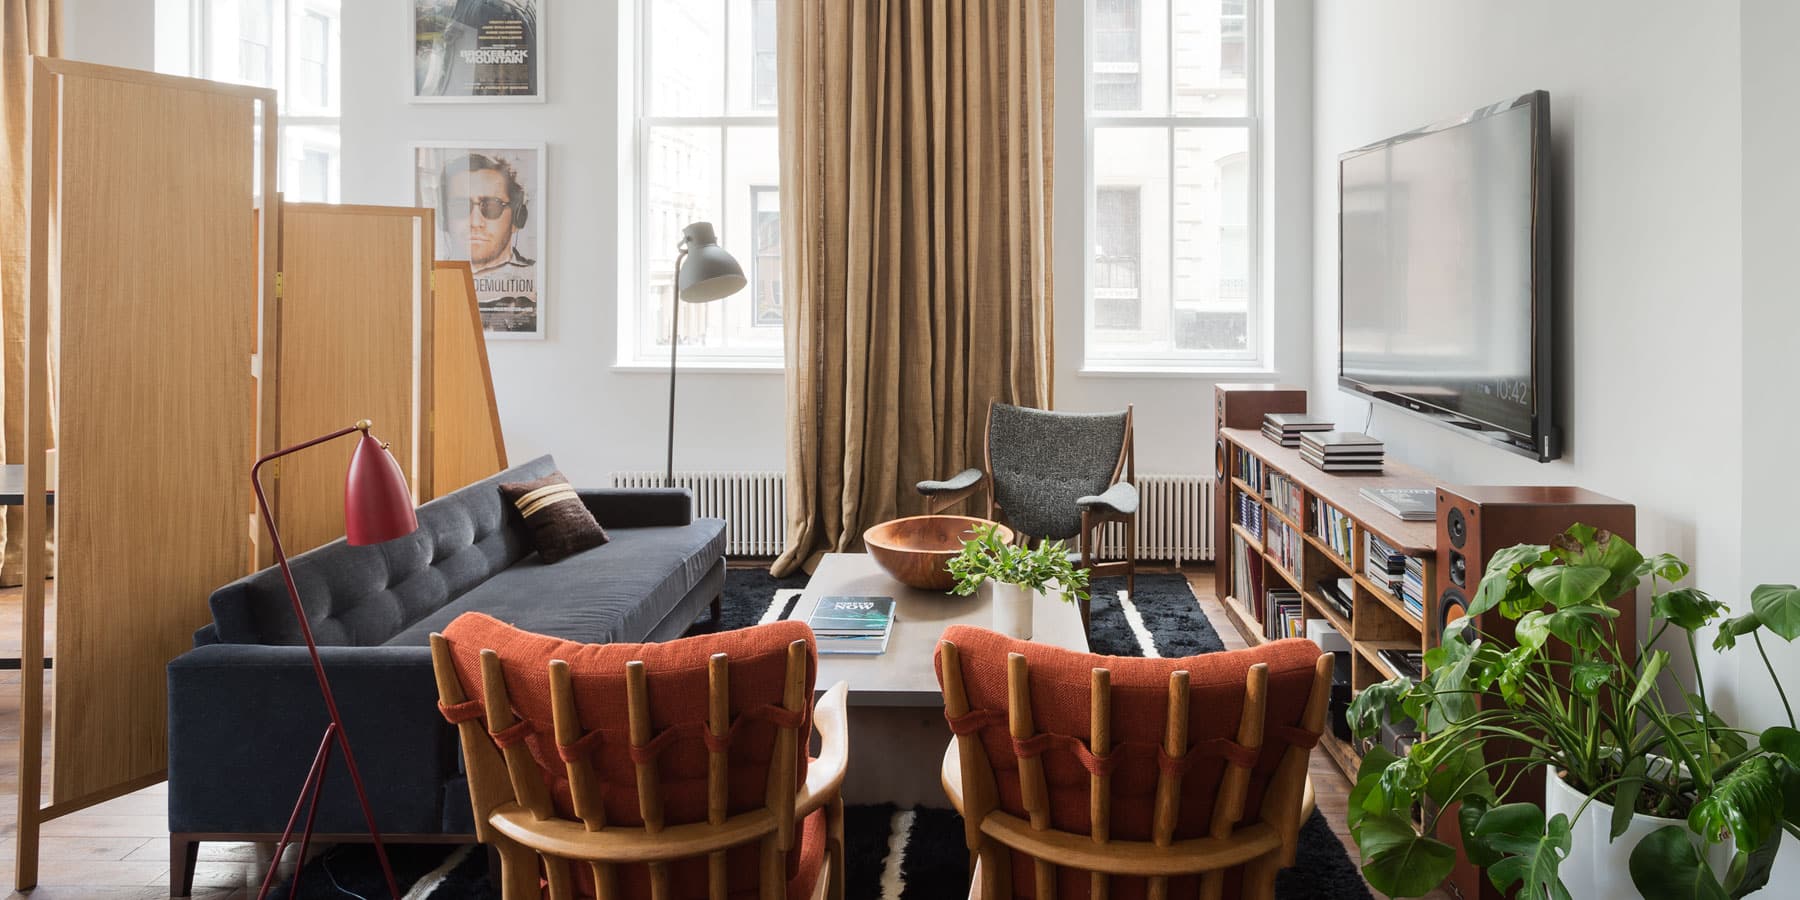 Tour Jake Gyllenhaal’s Art- and Design-Filled New York Office